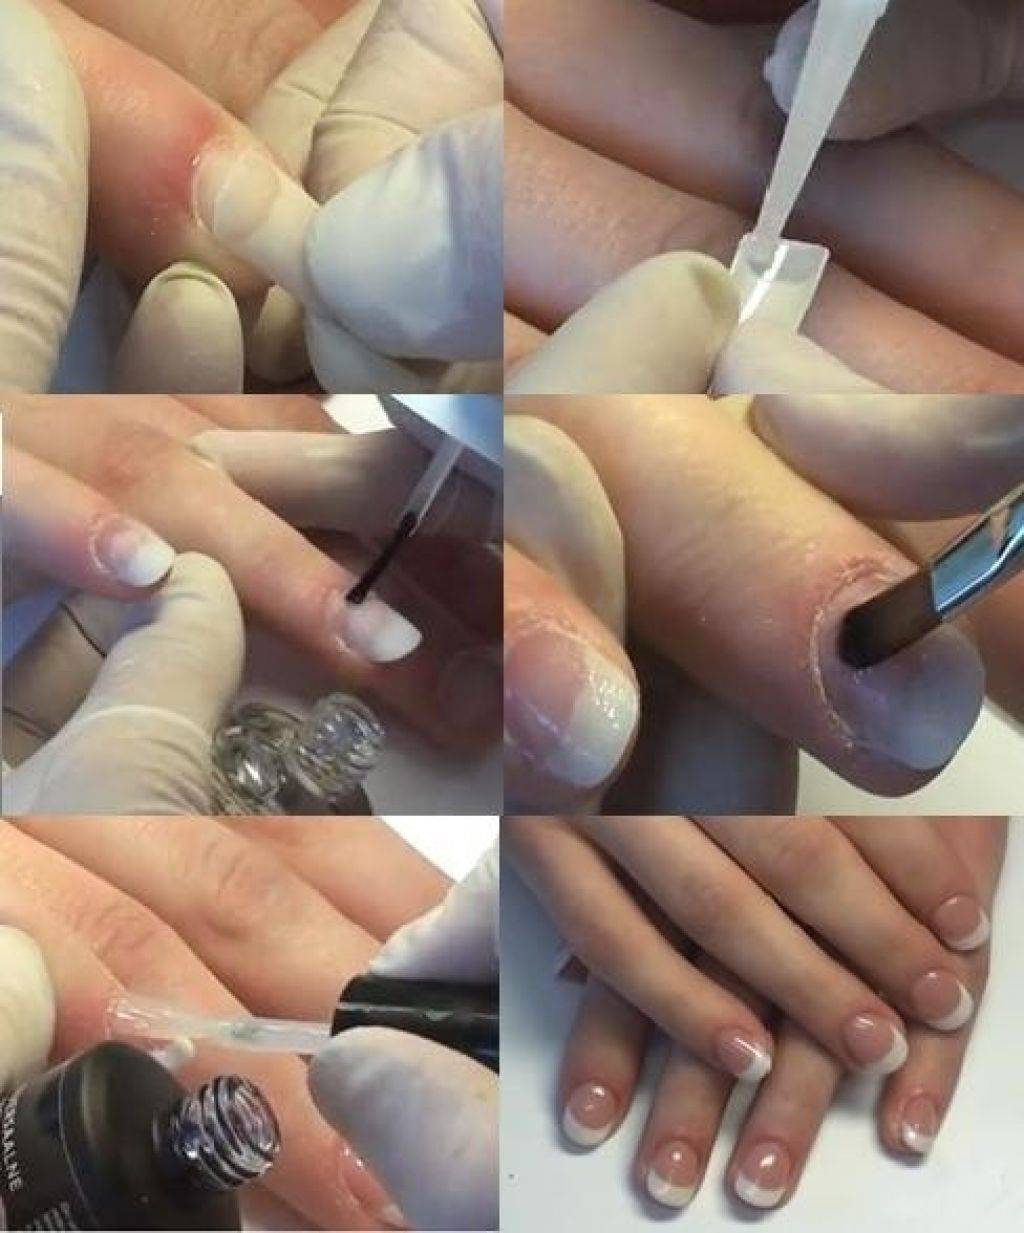 Техника наращивания ногтей гелем на типсах в домашних условиях, поэтапно для начинающих: фото, видео